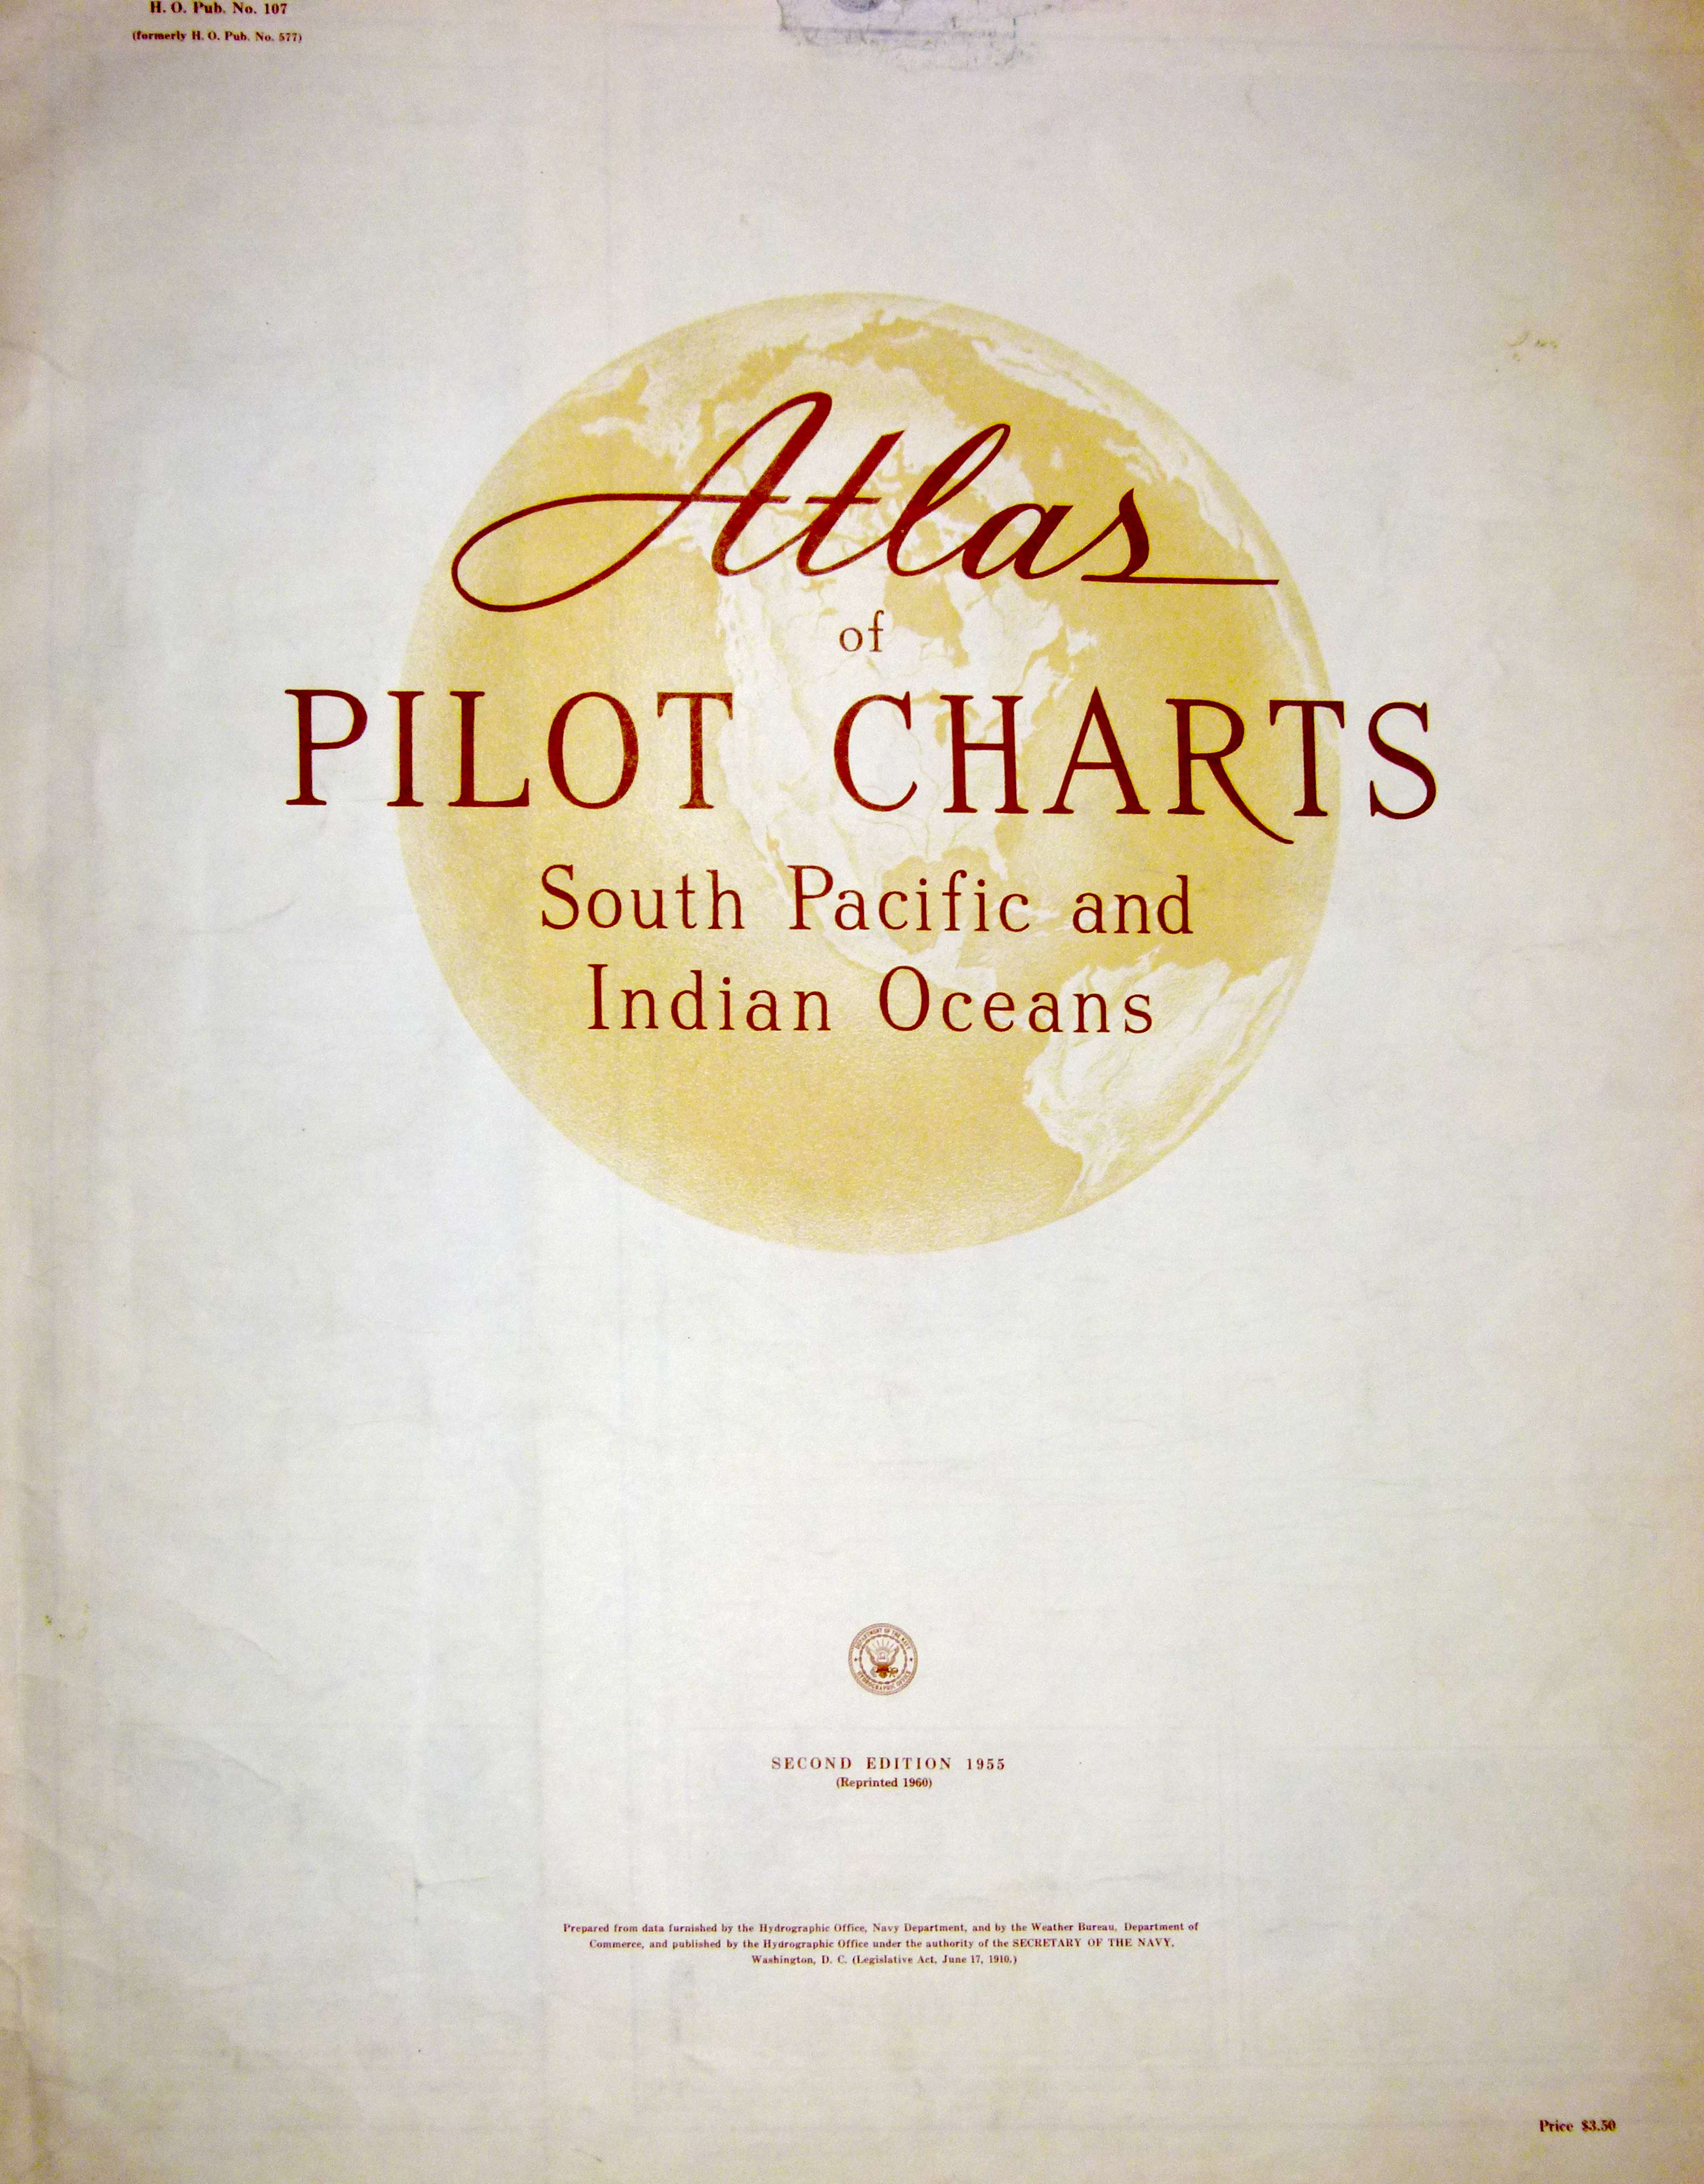 Pilot Charts Indian Ocean